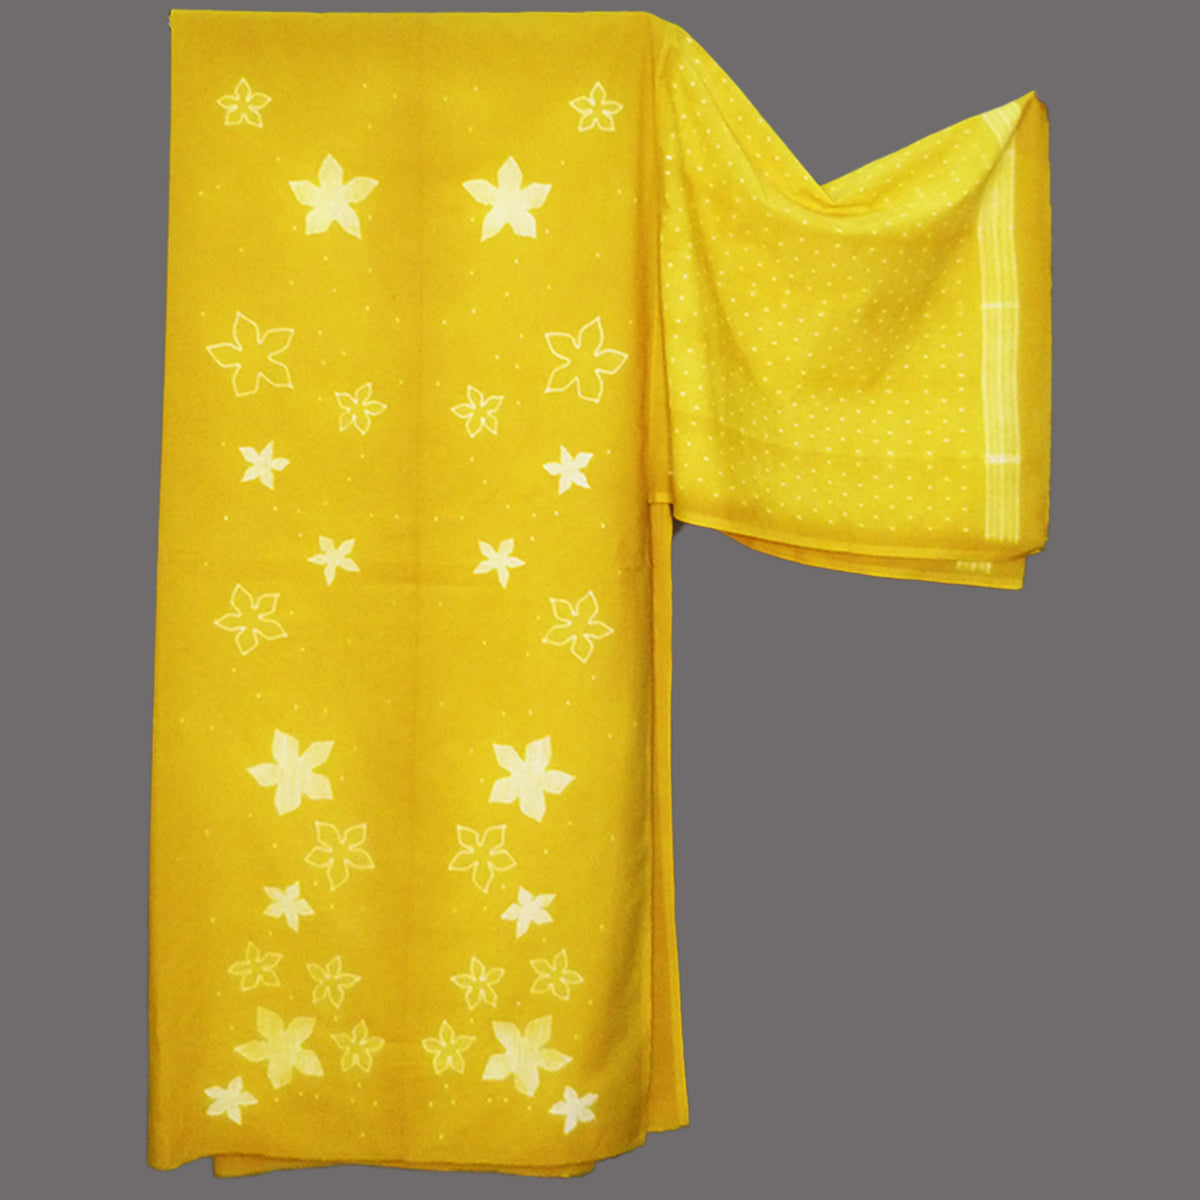 5 petal flowers design cambric shibori fabric in a heart warming yellow shade - 1